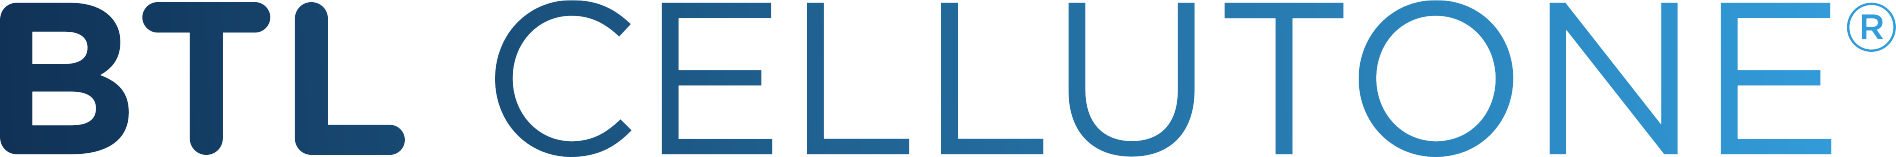 BTL_CELLUTONE-logo